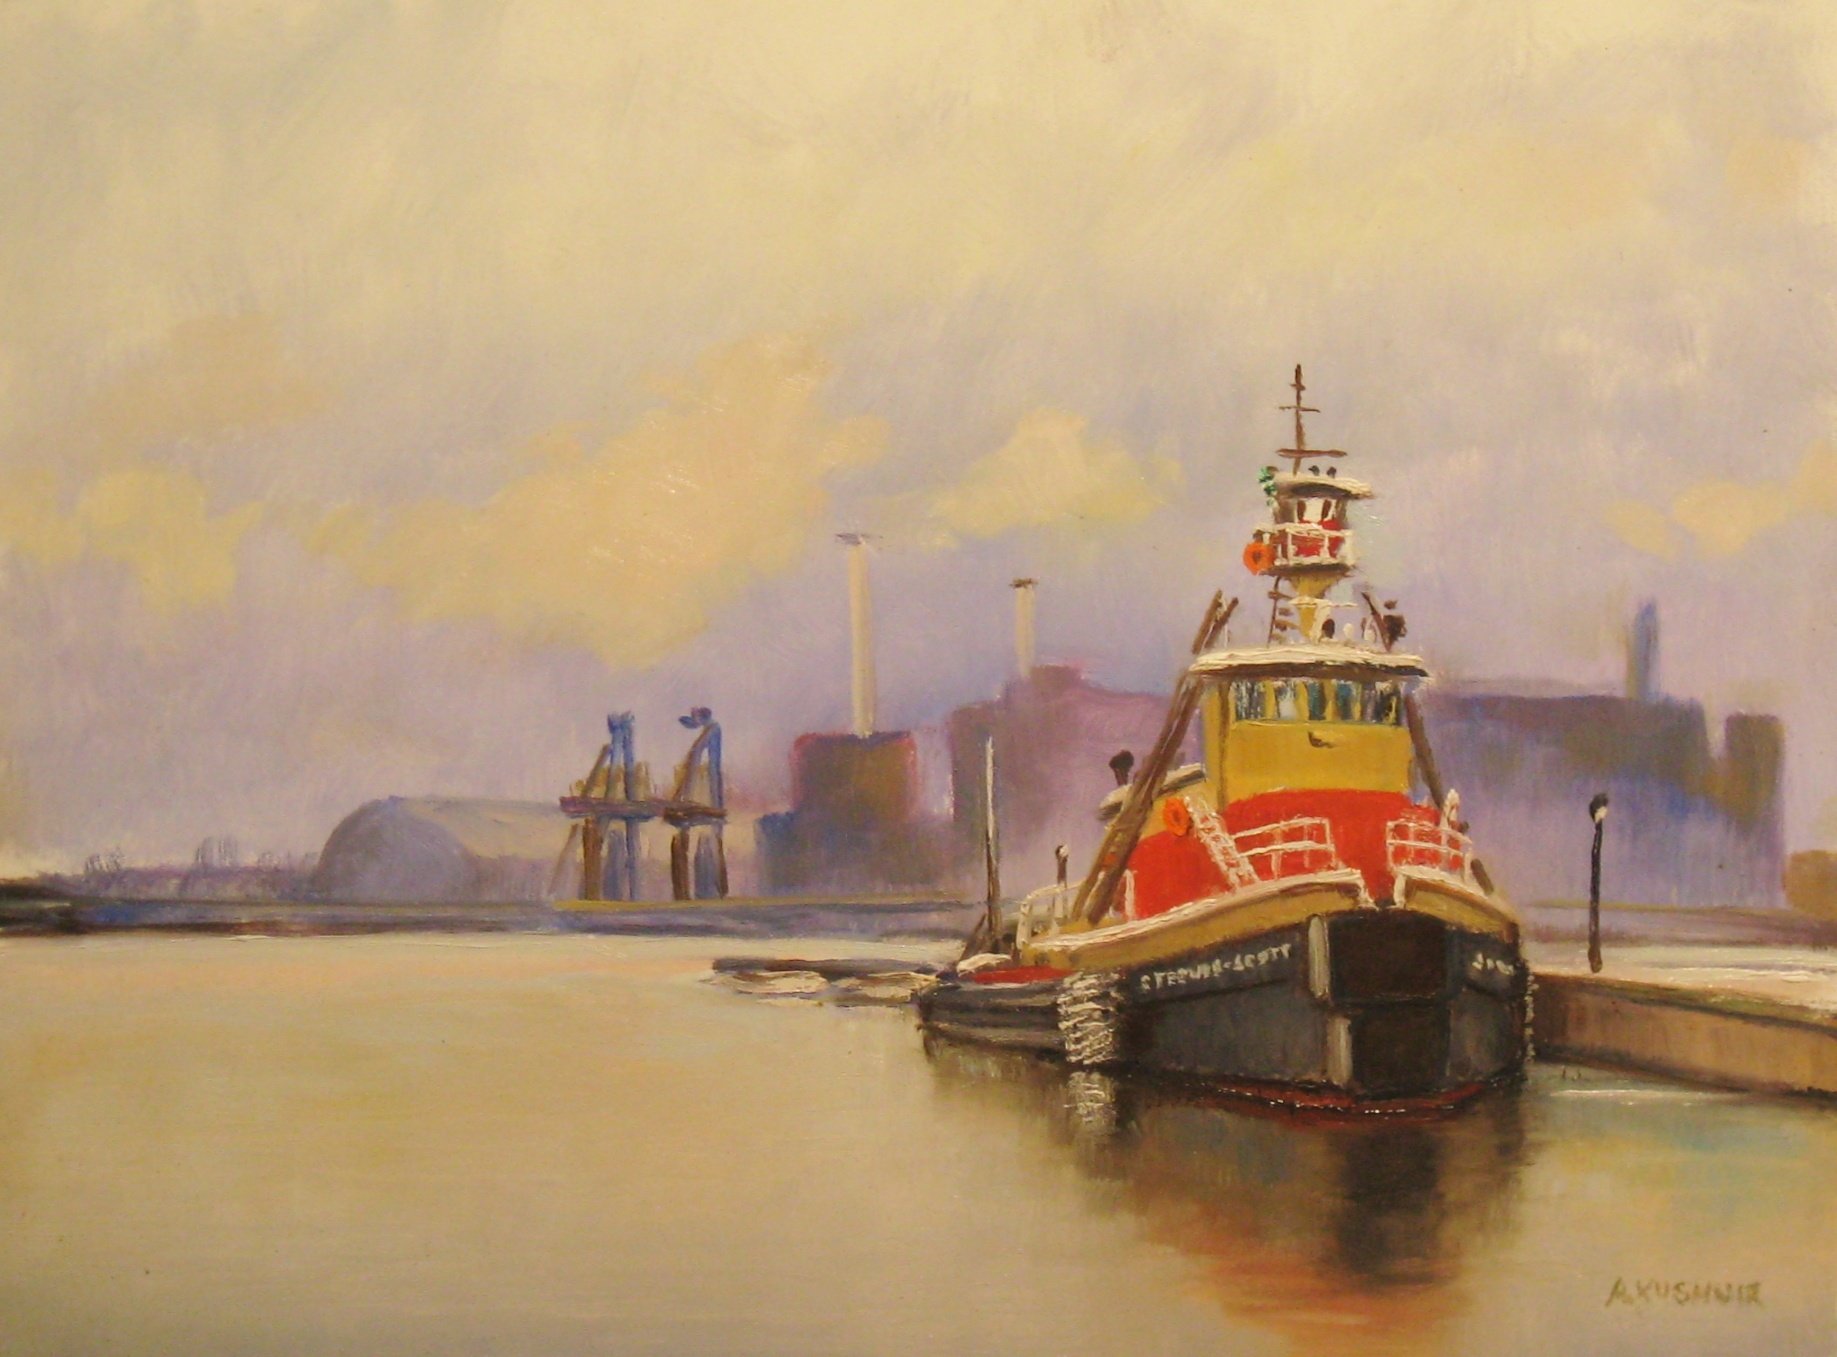 Kushnir, Tugboat, 9 x 12, Oil